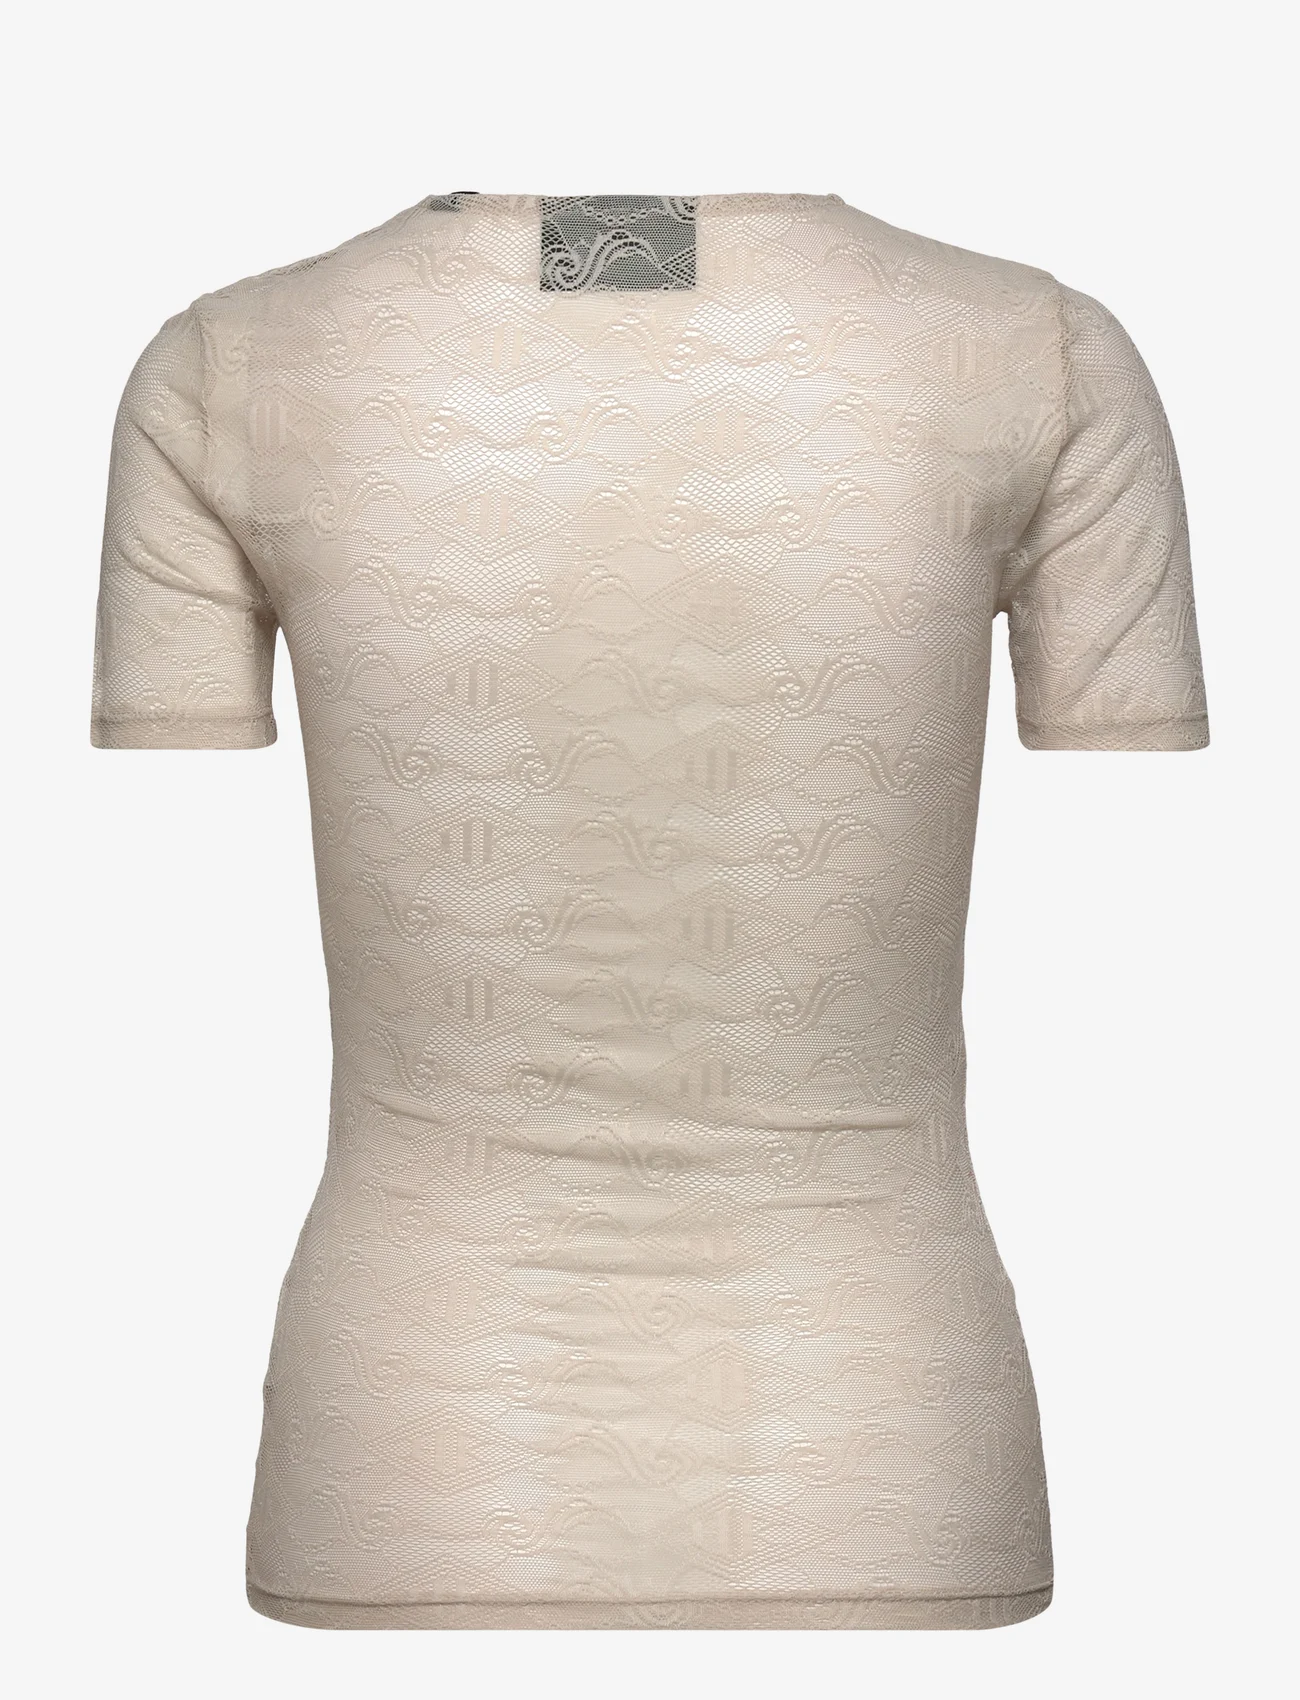 HAN Kjøbenhavn - Lace Monogram Short Sleeve - marškinėliai - light sand - 1